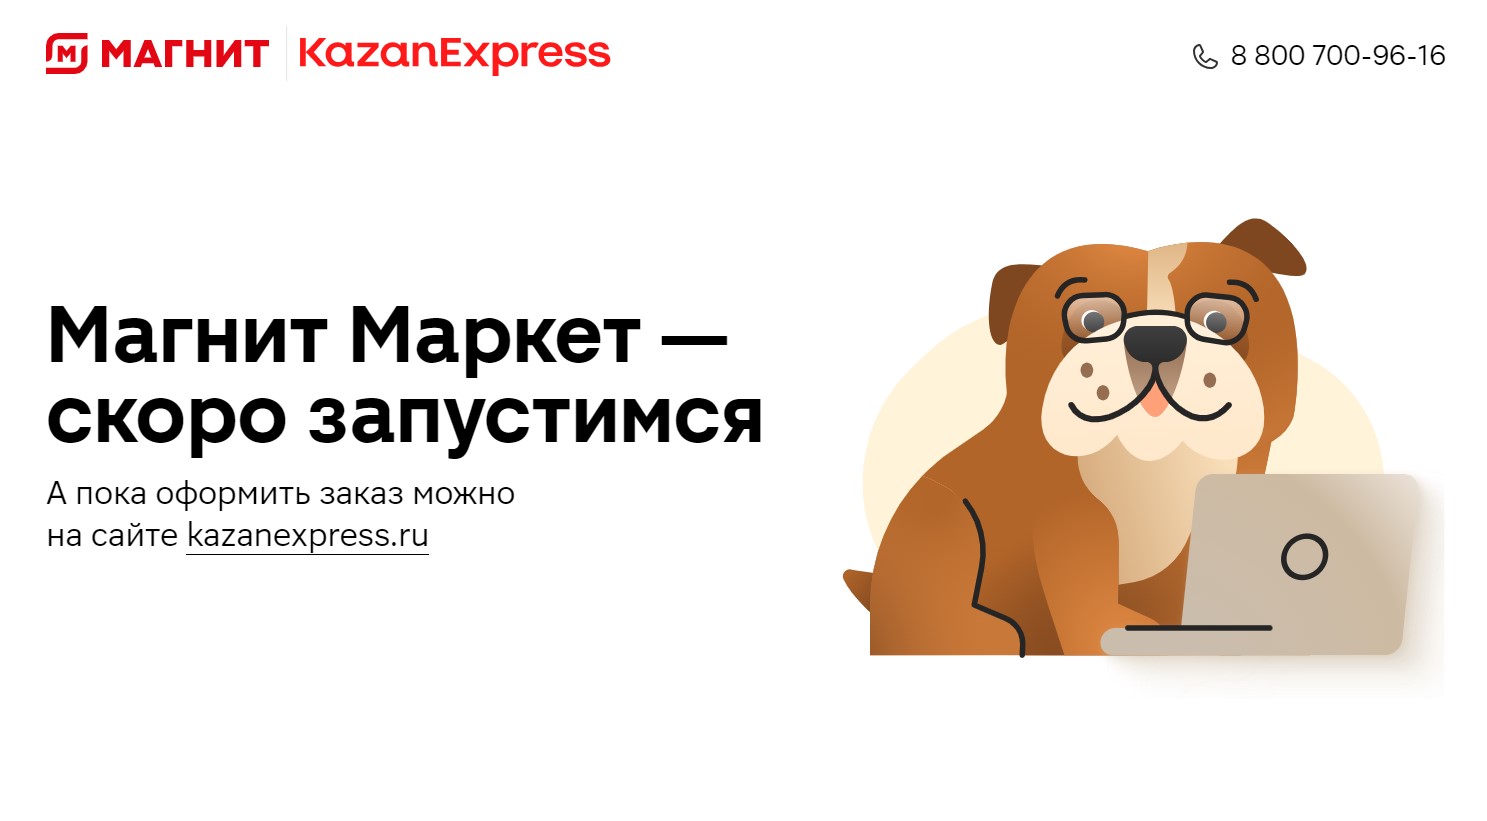 На базе KazanExpress откроется Магнит Маркет